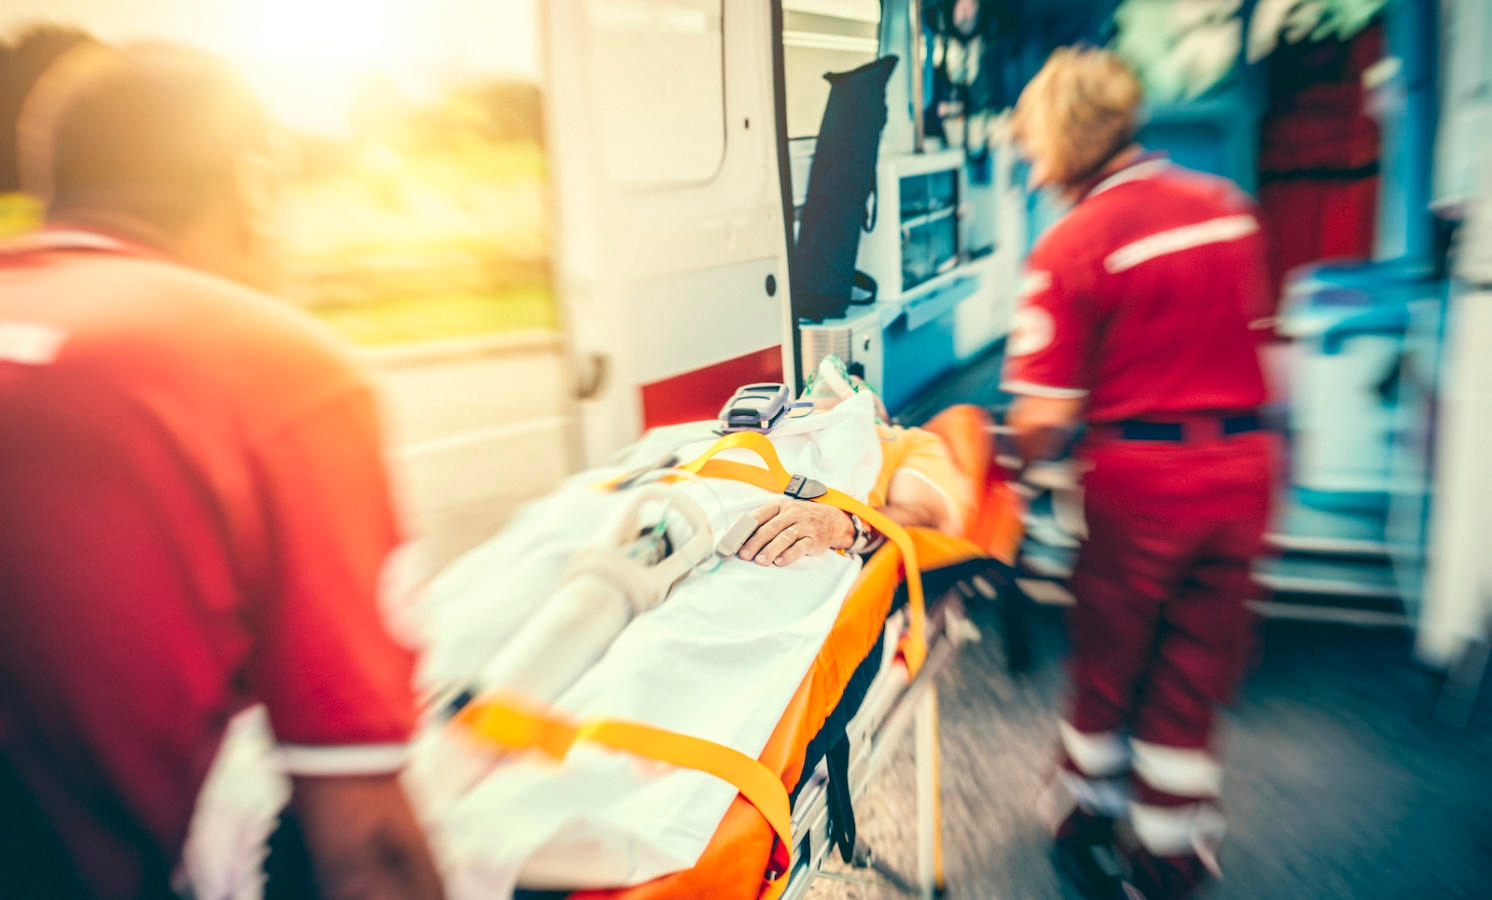 EMT first aid